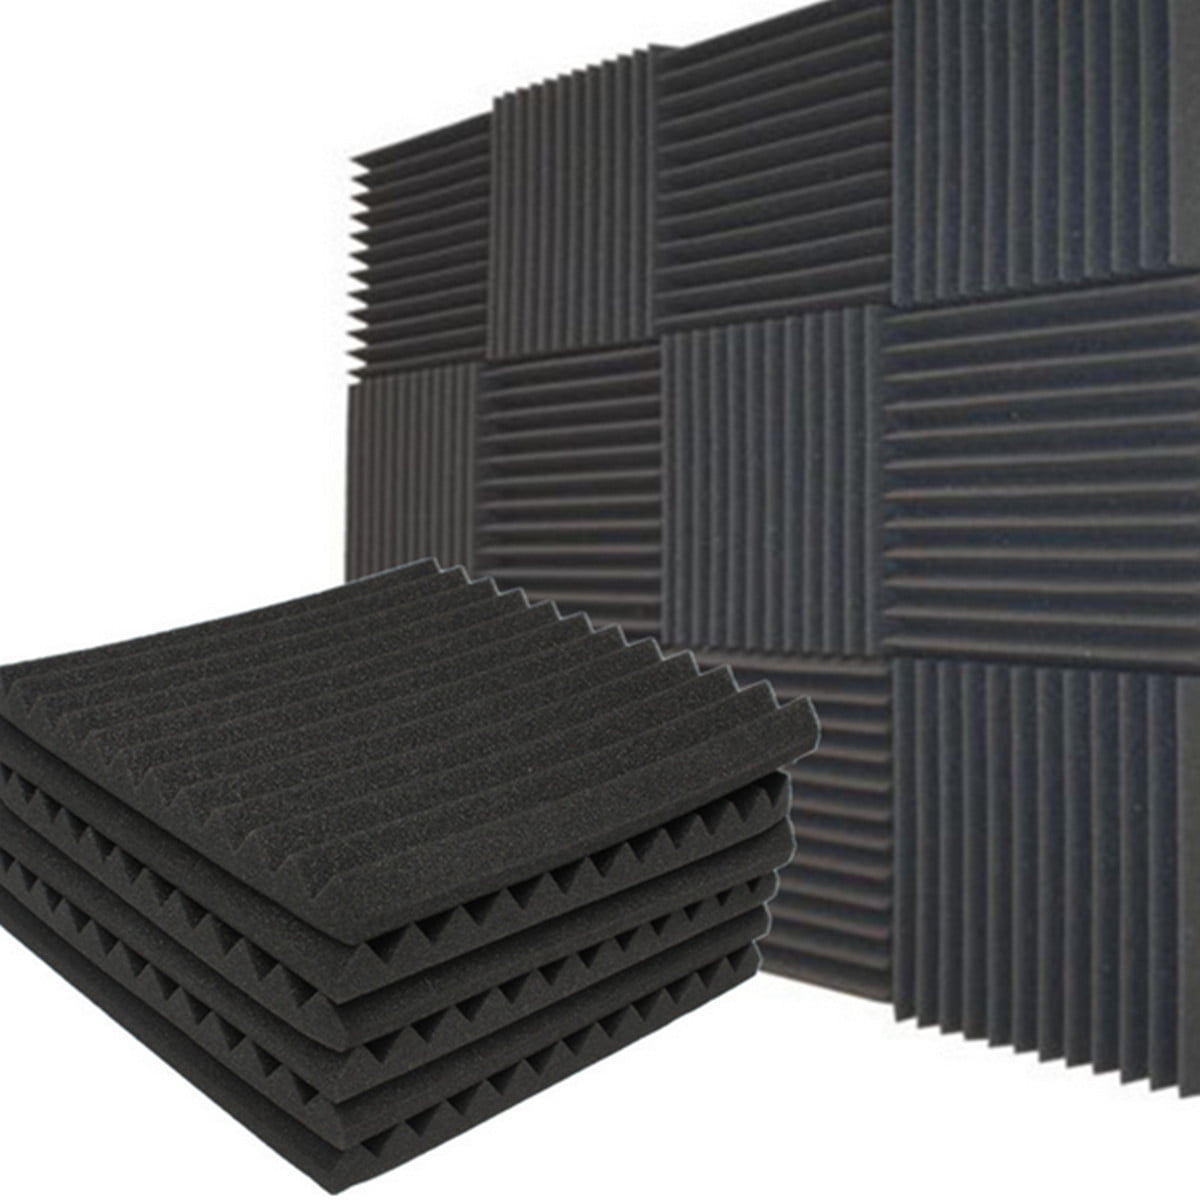 Acoustic Foam Panel Noise Absorbing Soundproof Sponge, Pyramidal Groove,  30x30x5cm, for Recording Studio Ktv, Black, Pack of 6 